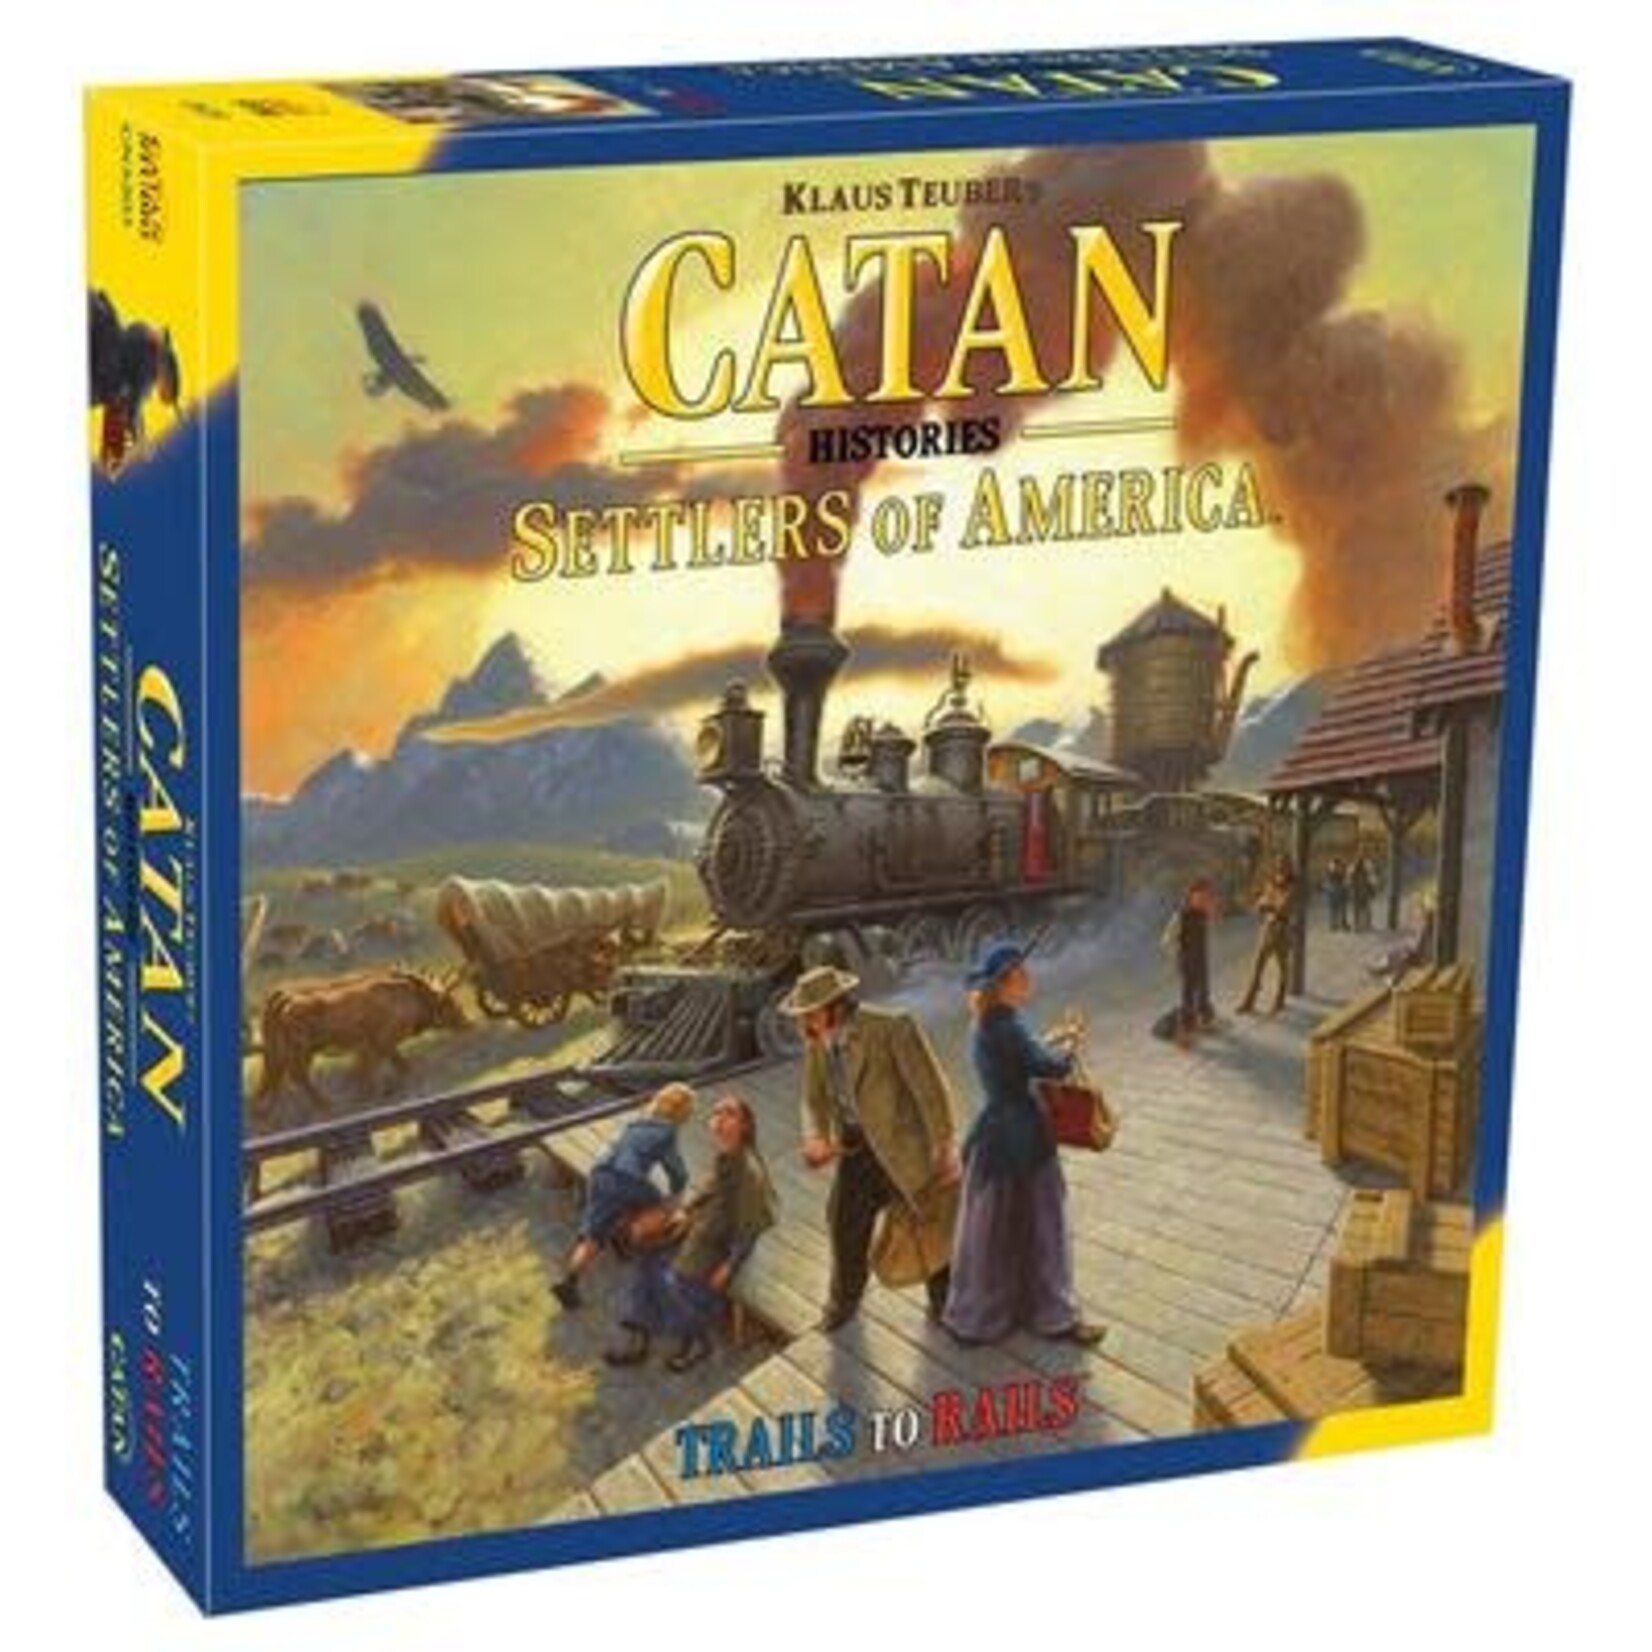 Catan Studio Catan - Settlers of America